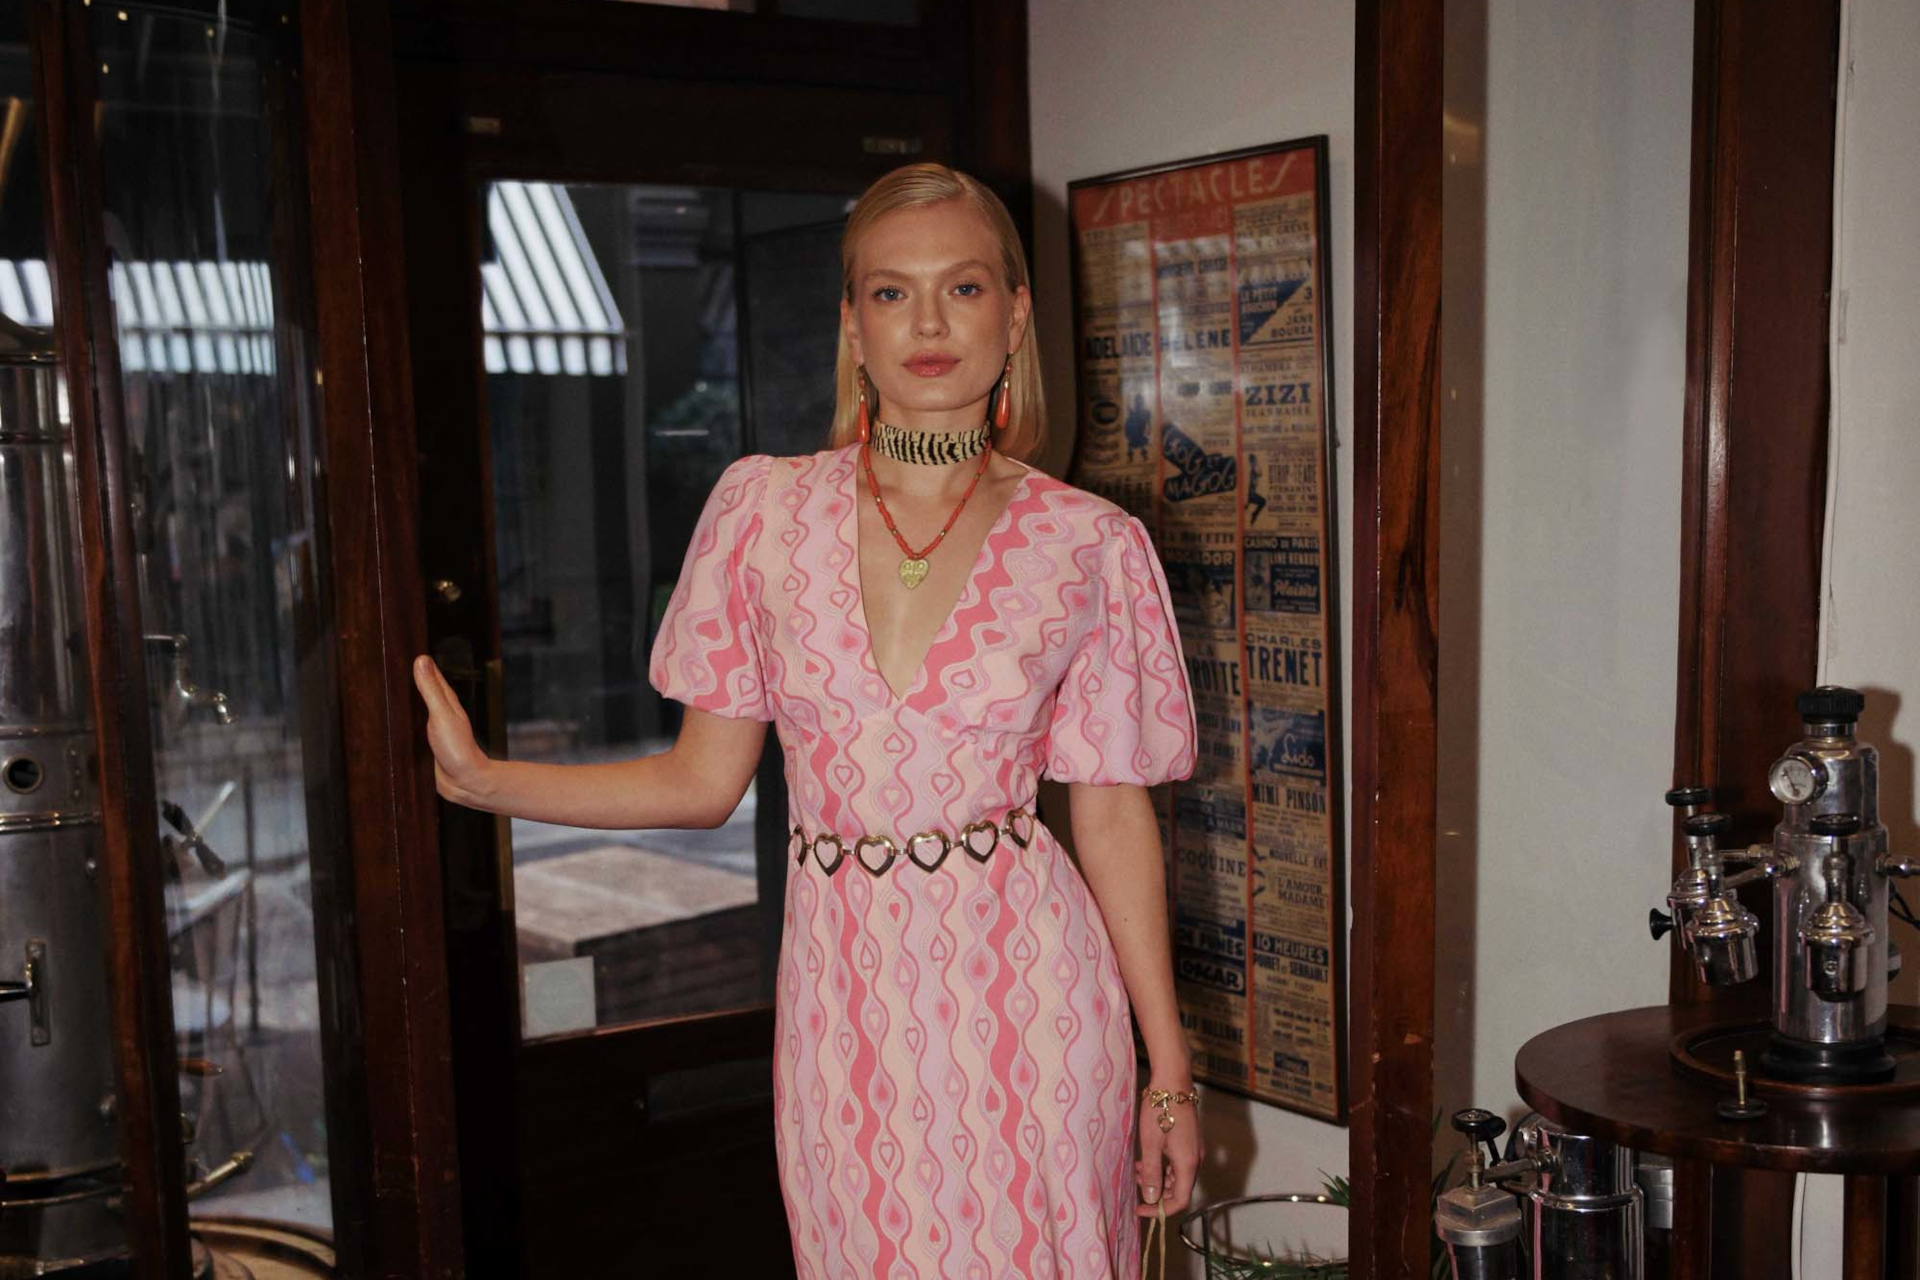 Woman stood in doorway wearing pink dress